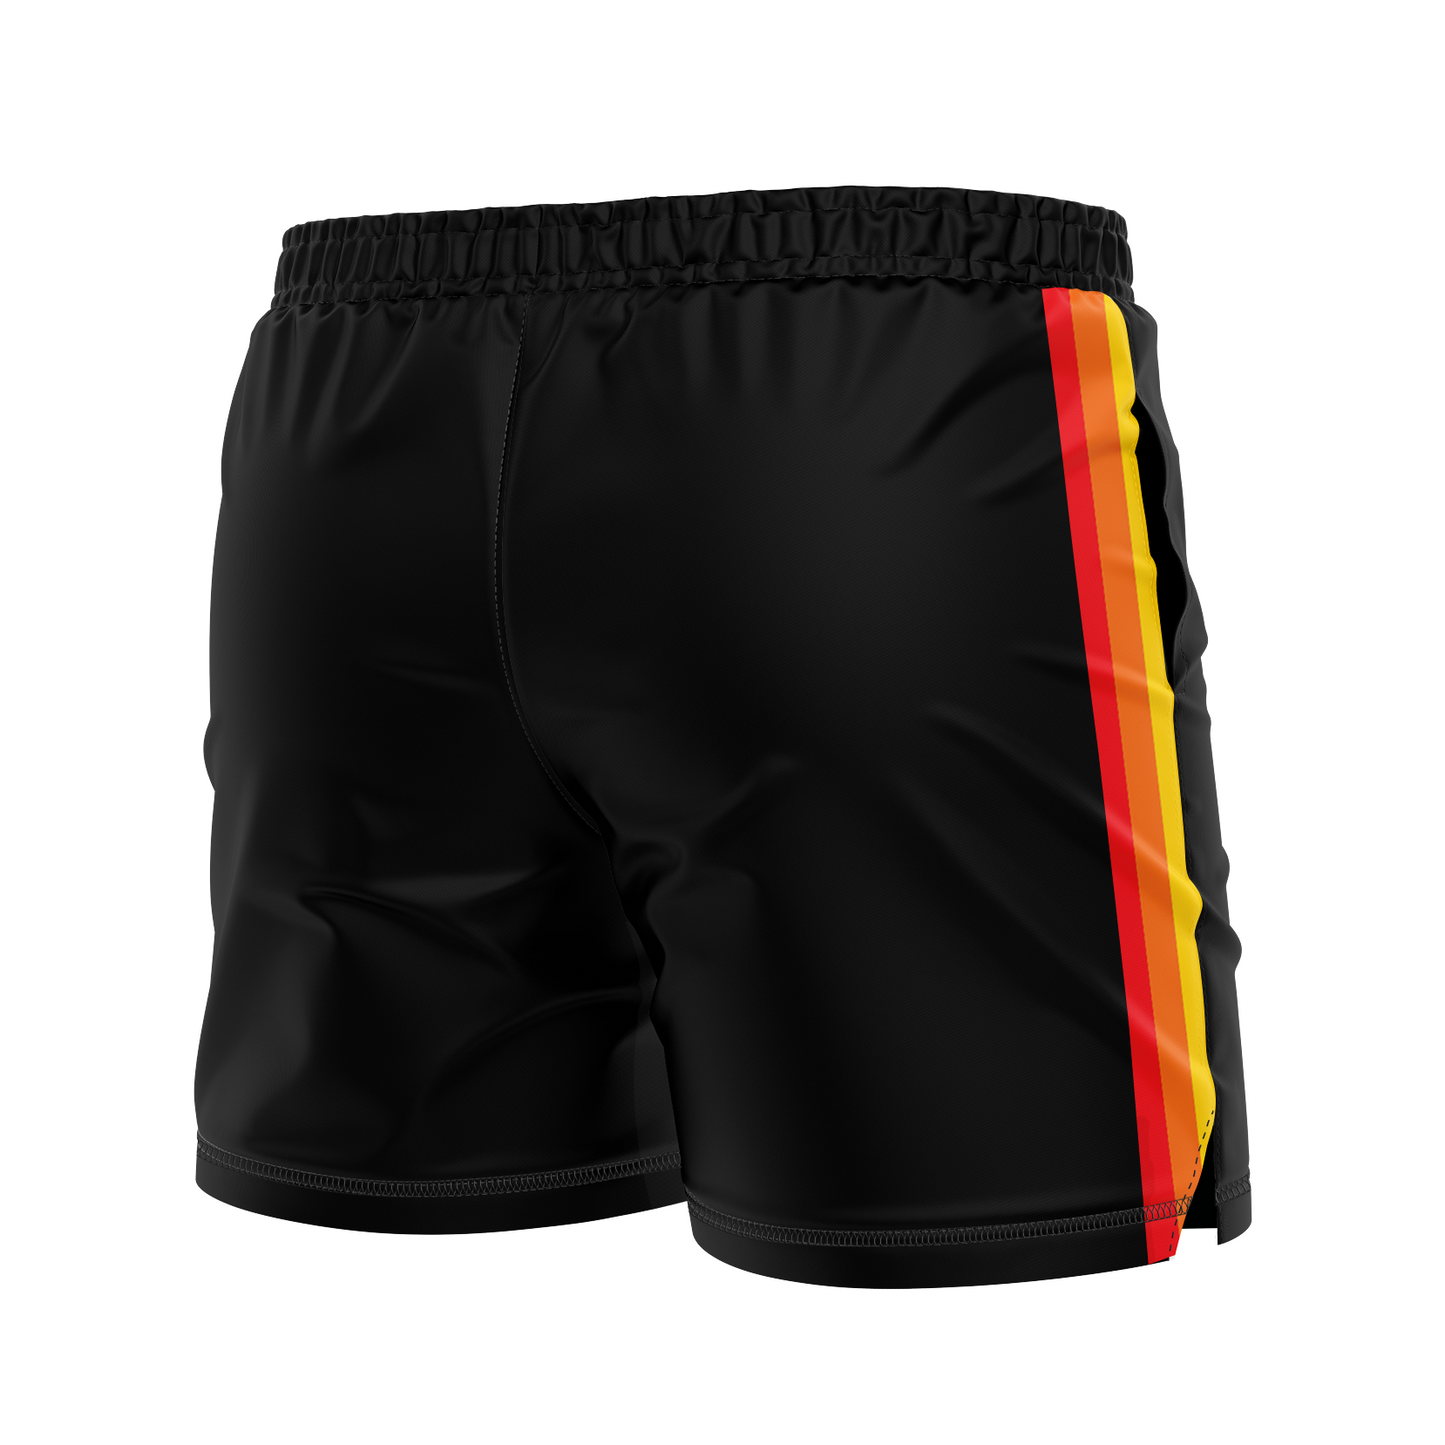 CCFC men's FC shorts 8bit Overlords, black and orange